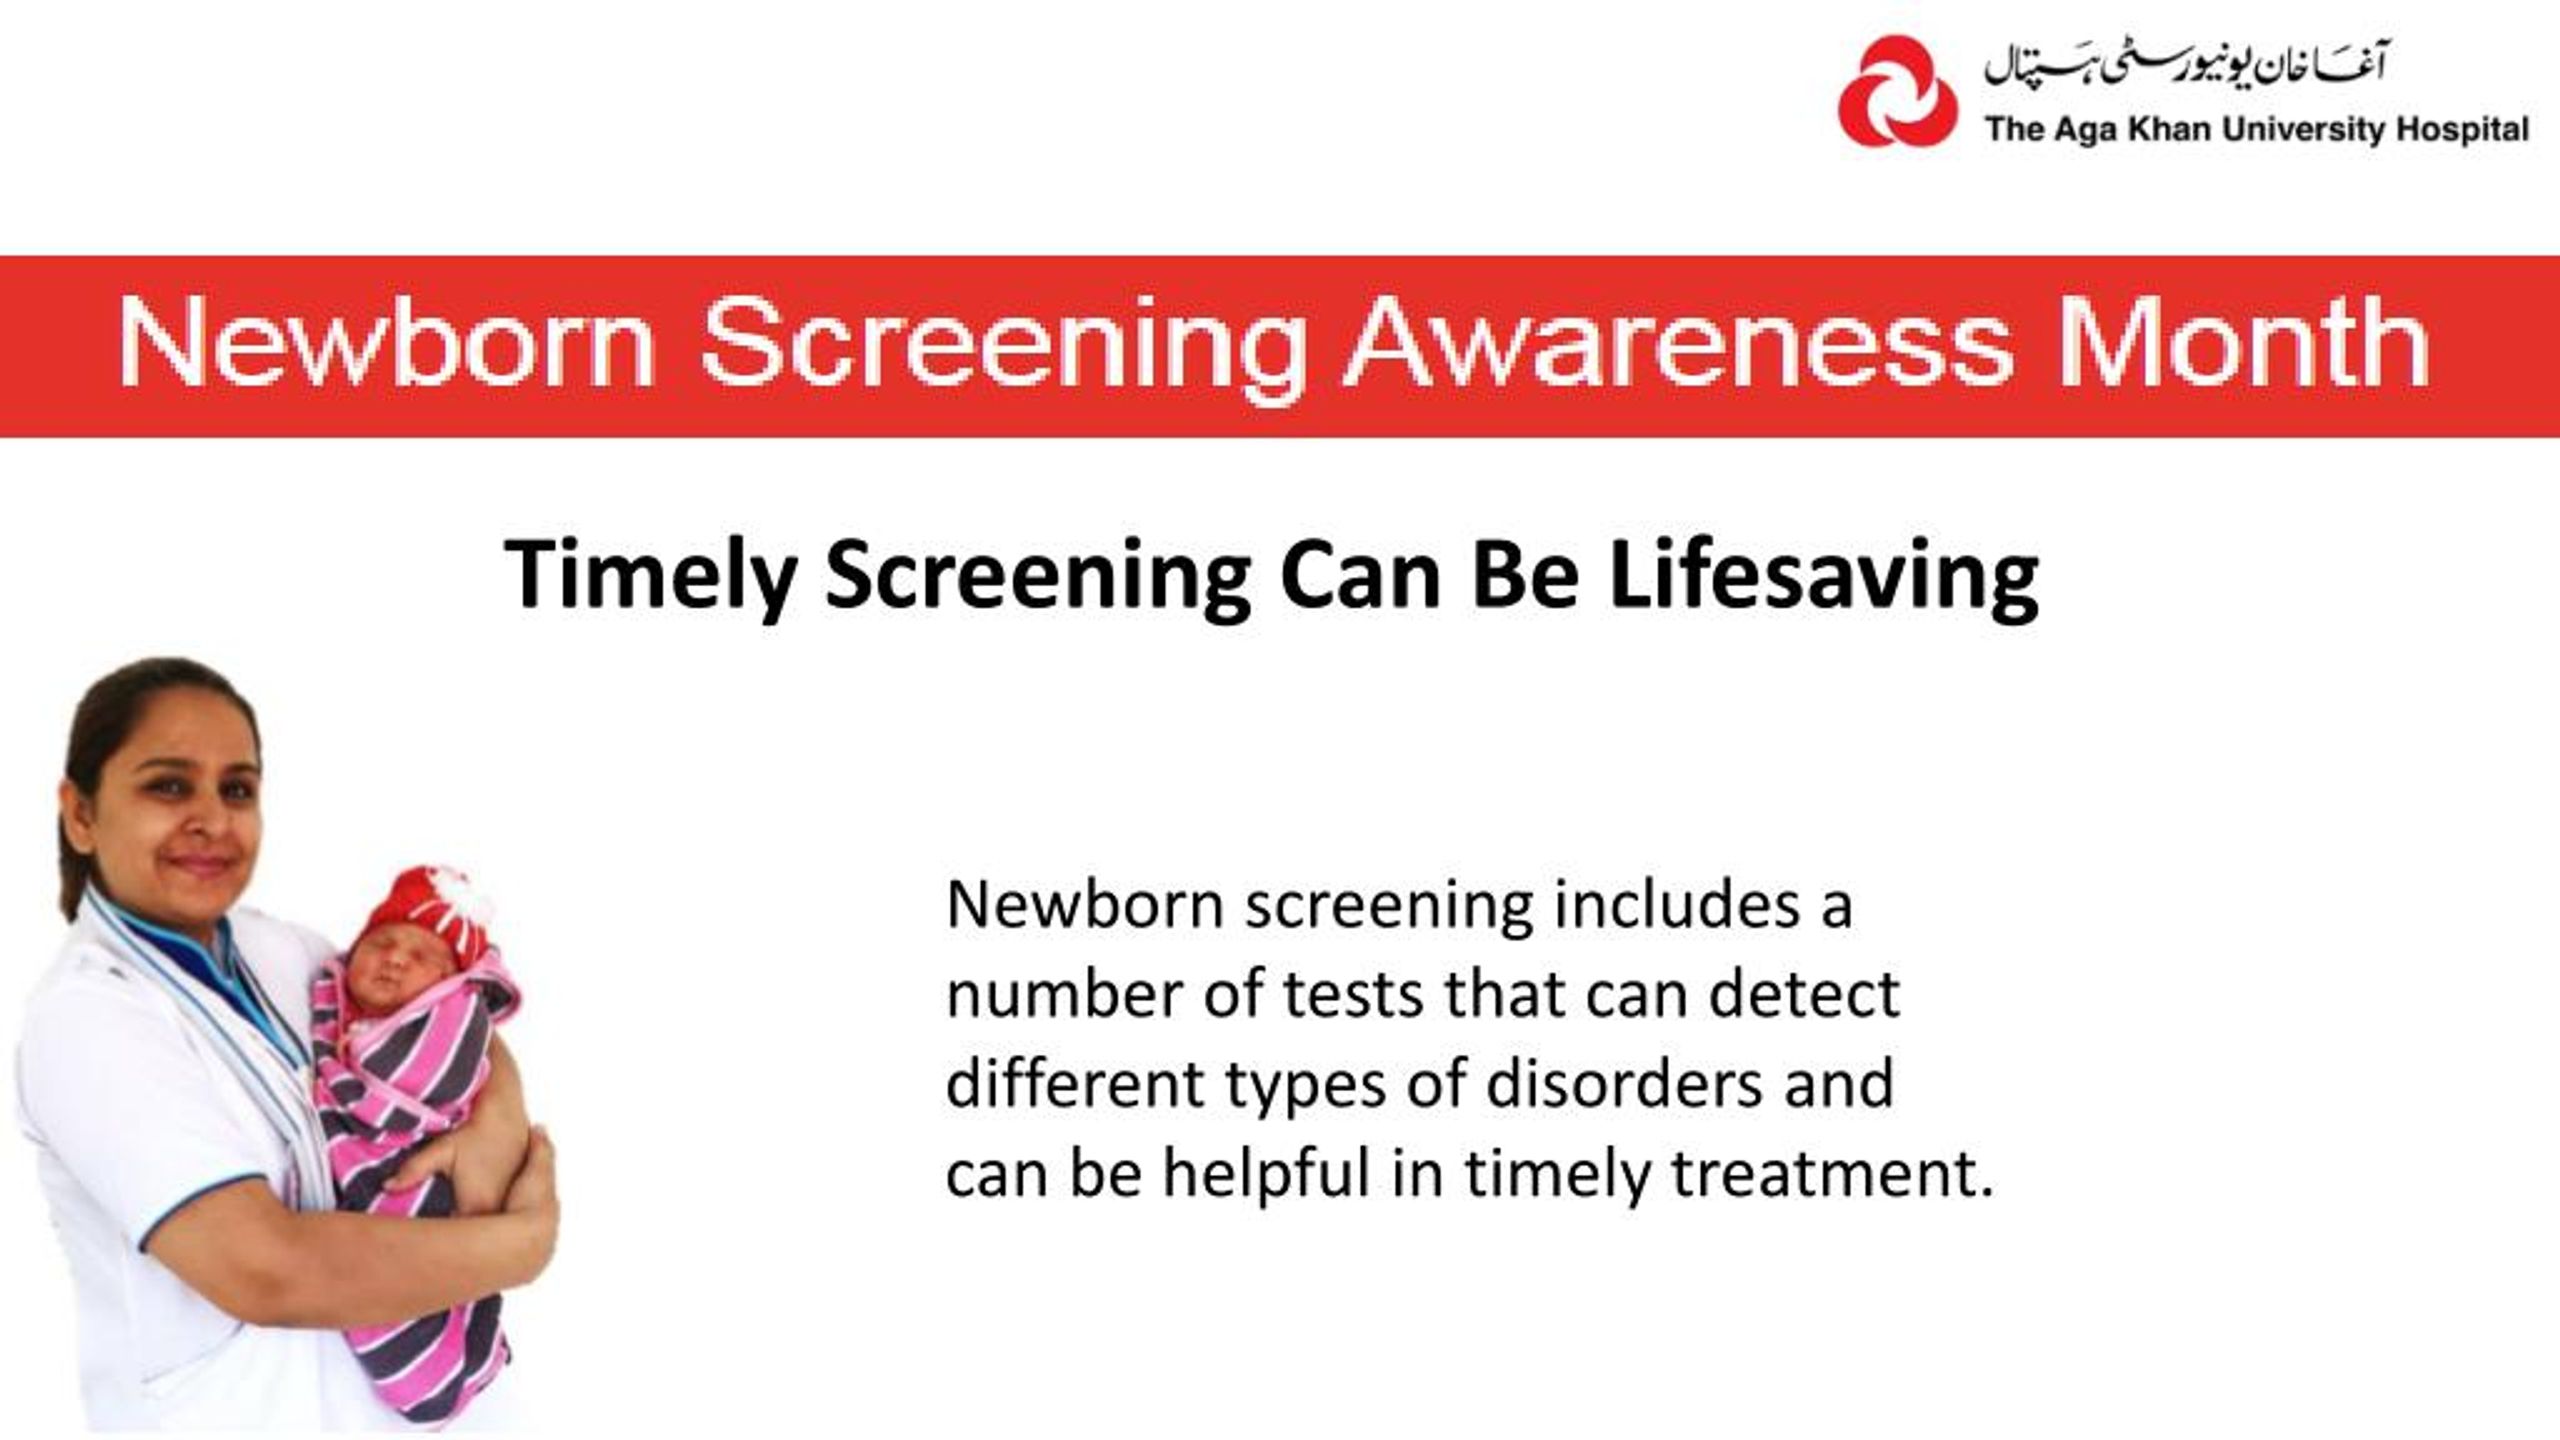 newborn screening presentation